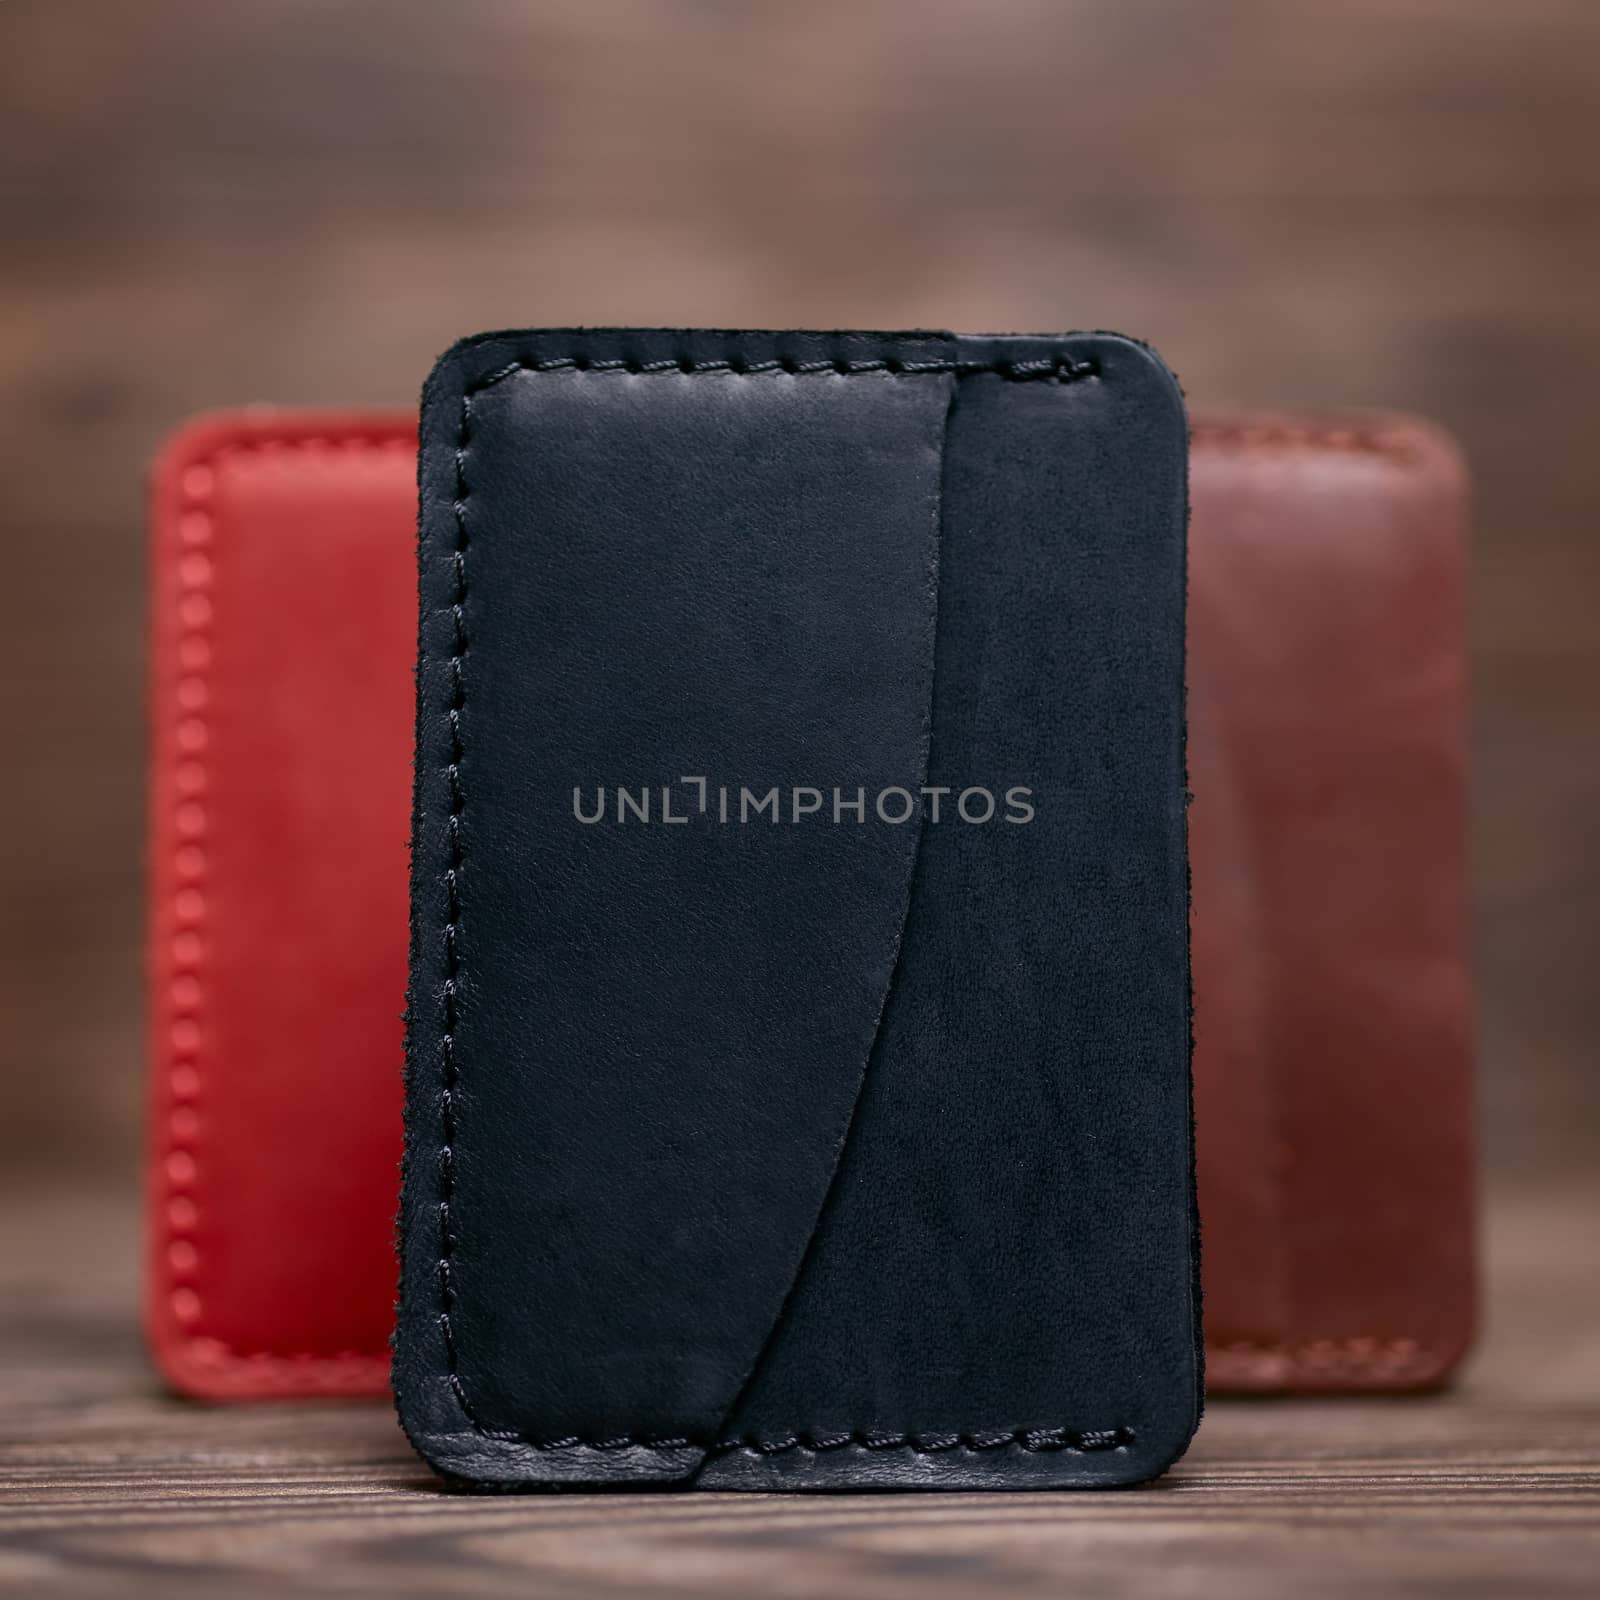 One pocket black leather handmade cardholder. On blurred background stay other colour cardholders. Stock photo on blurred background. by alexsdriver